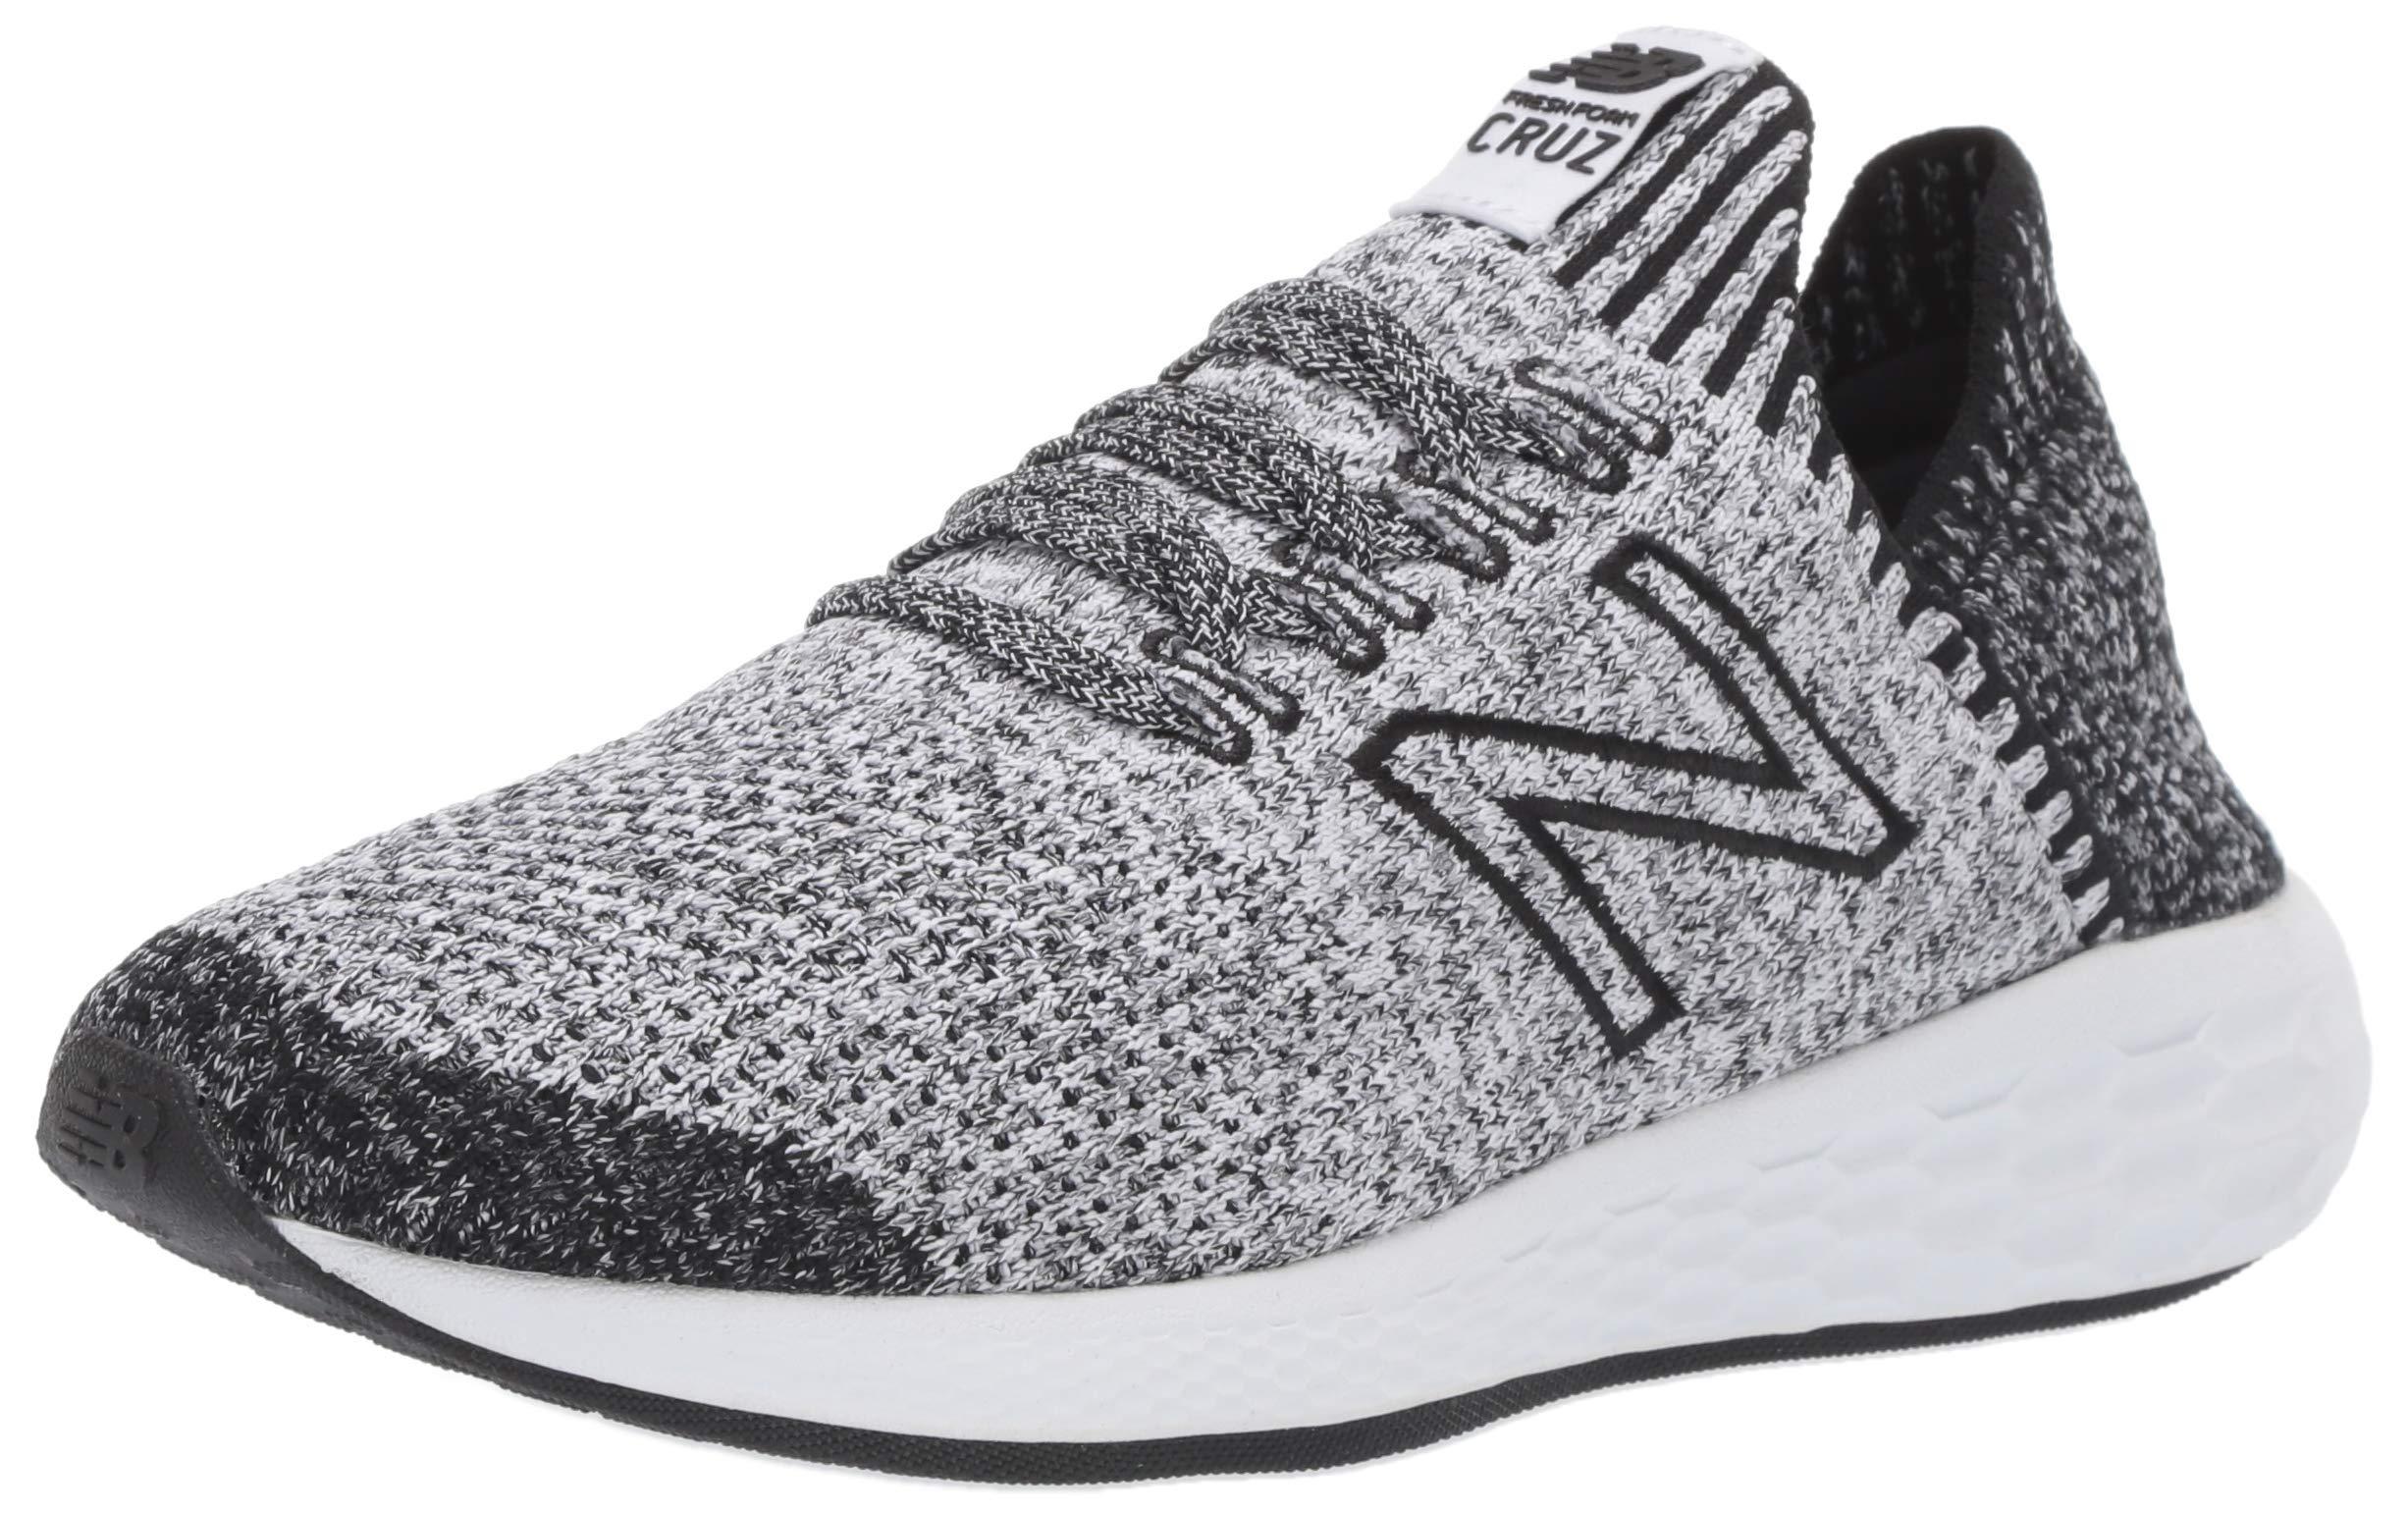 New Balance Fresh Foam Cruz Sockfit Running Shoes in Black/White (Black) -  Save 71% | Lyst